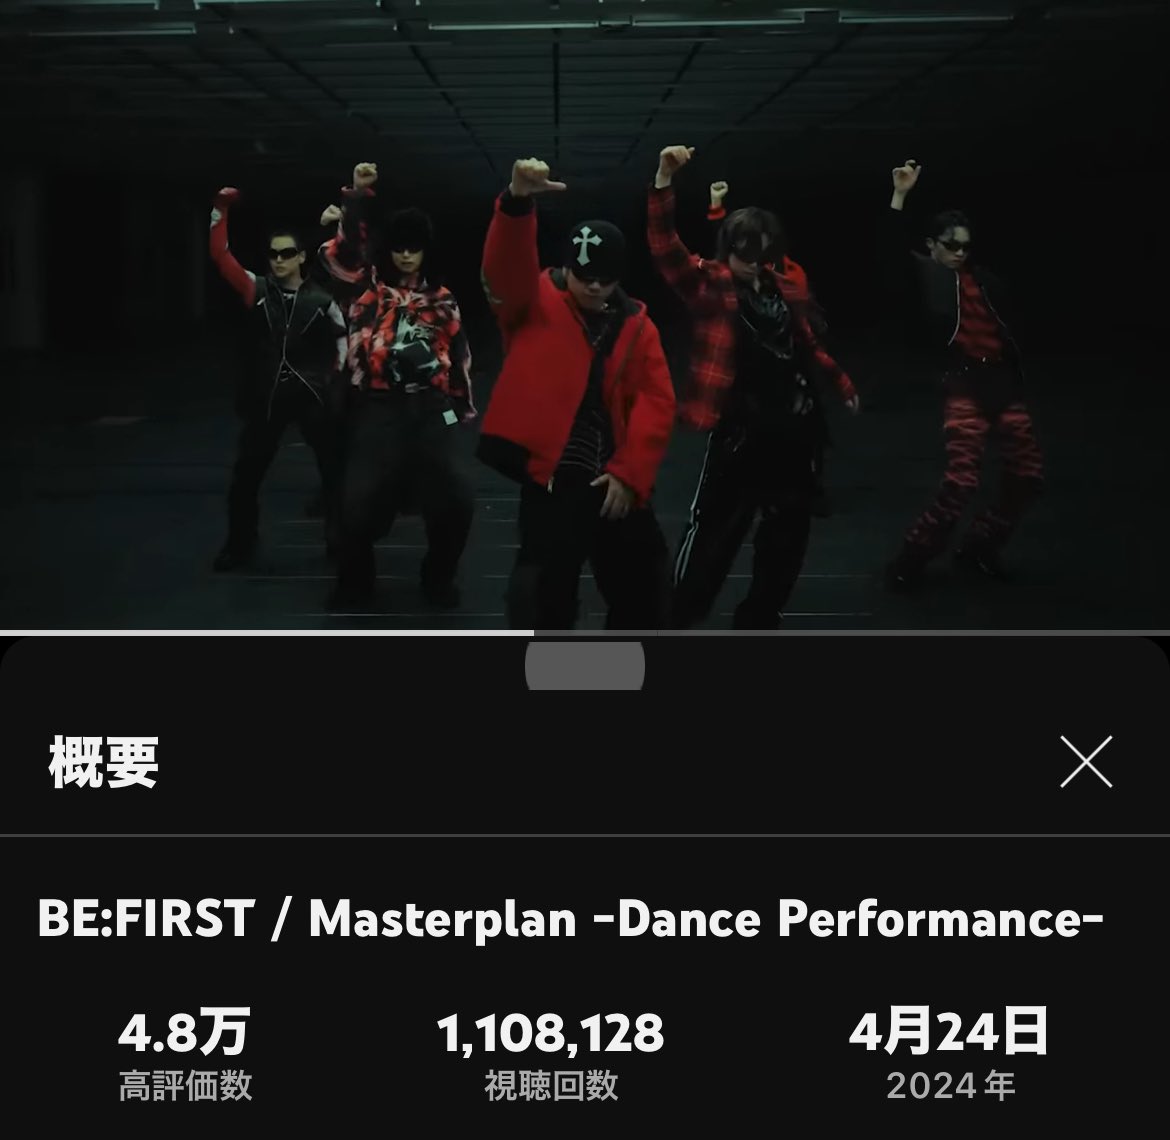 Masterplan-DancePerformance-
110万回再生突破おめでとう✨✨
MVと合わせて見てるよ☺️✨

#BF_Masterplan
#BEFIRST

youtu.be/O_MbvlMTs3Y?si…